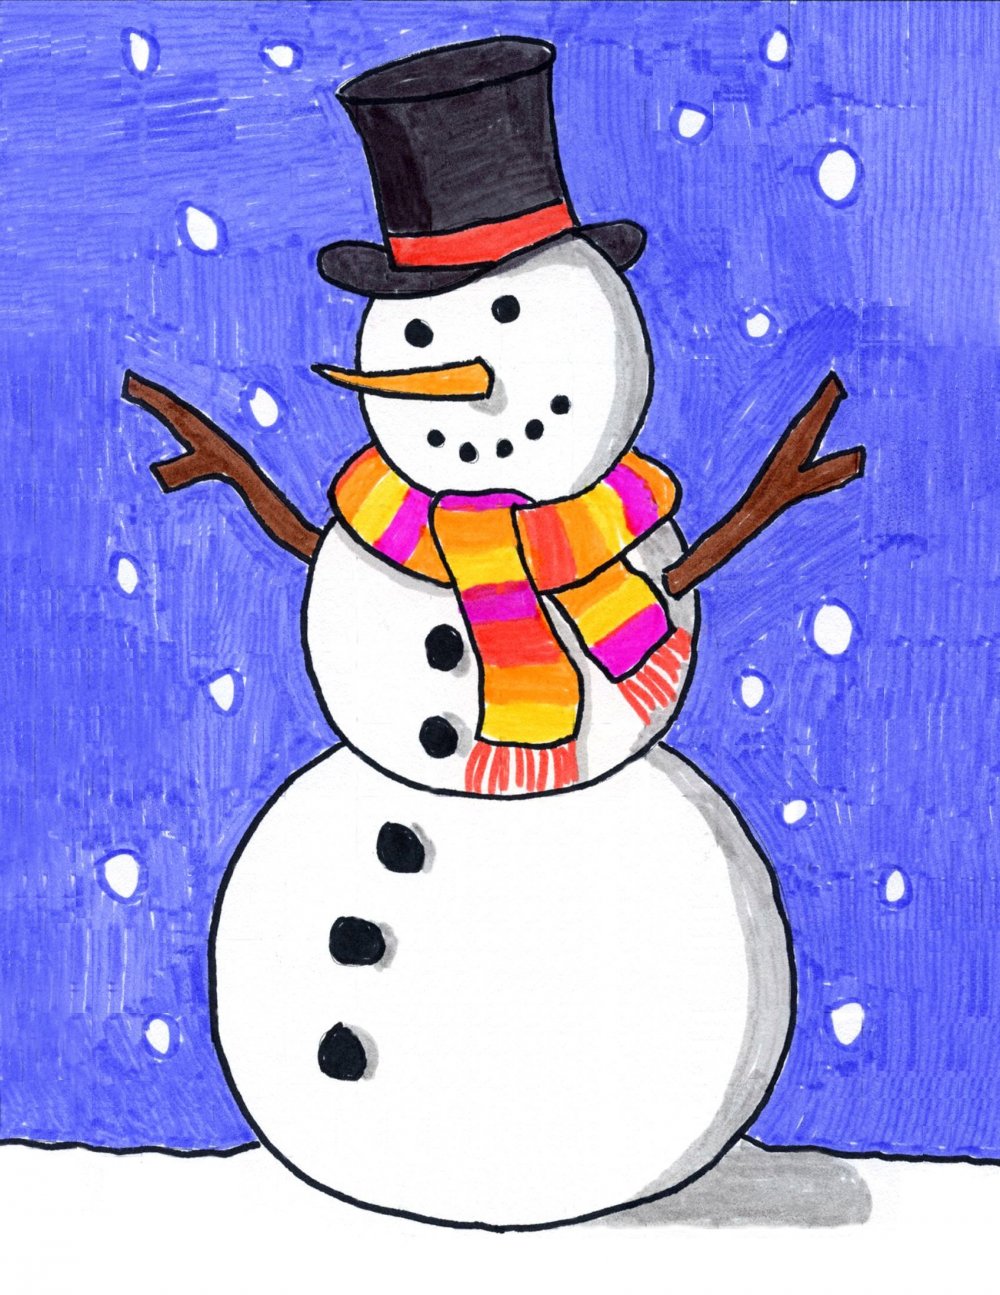 Рисование снеговика